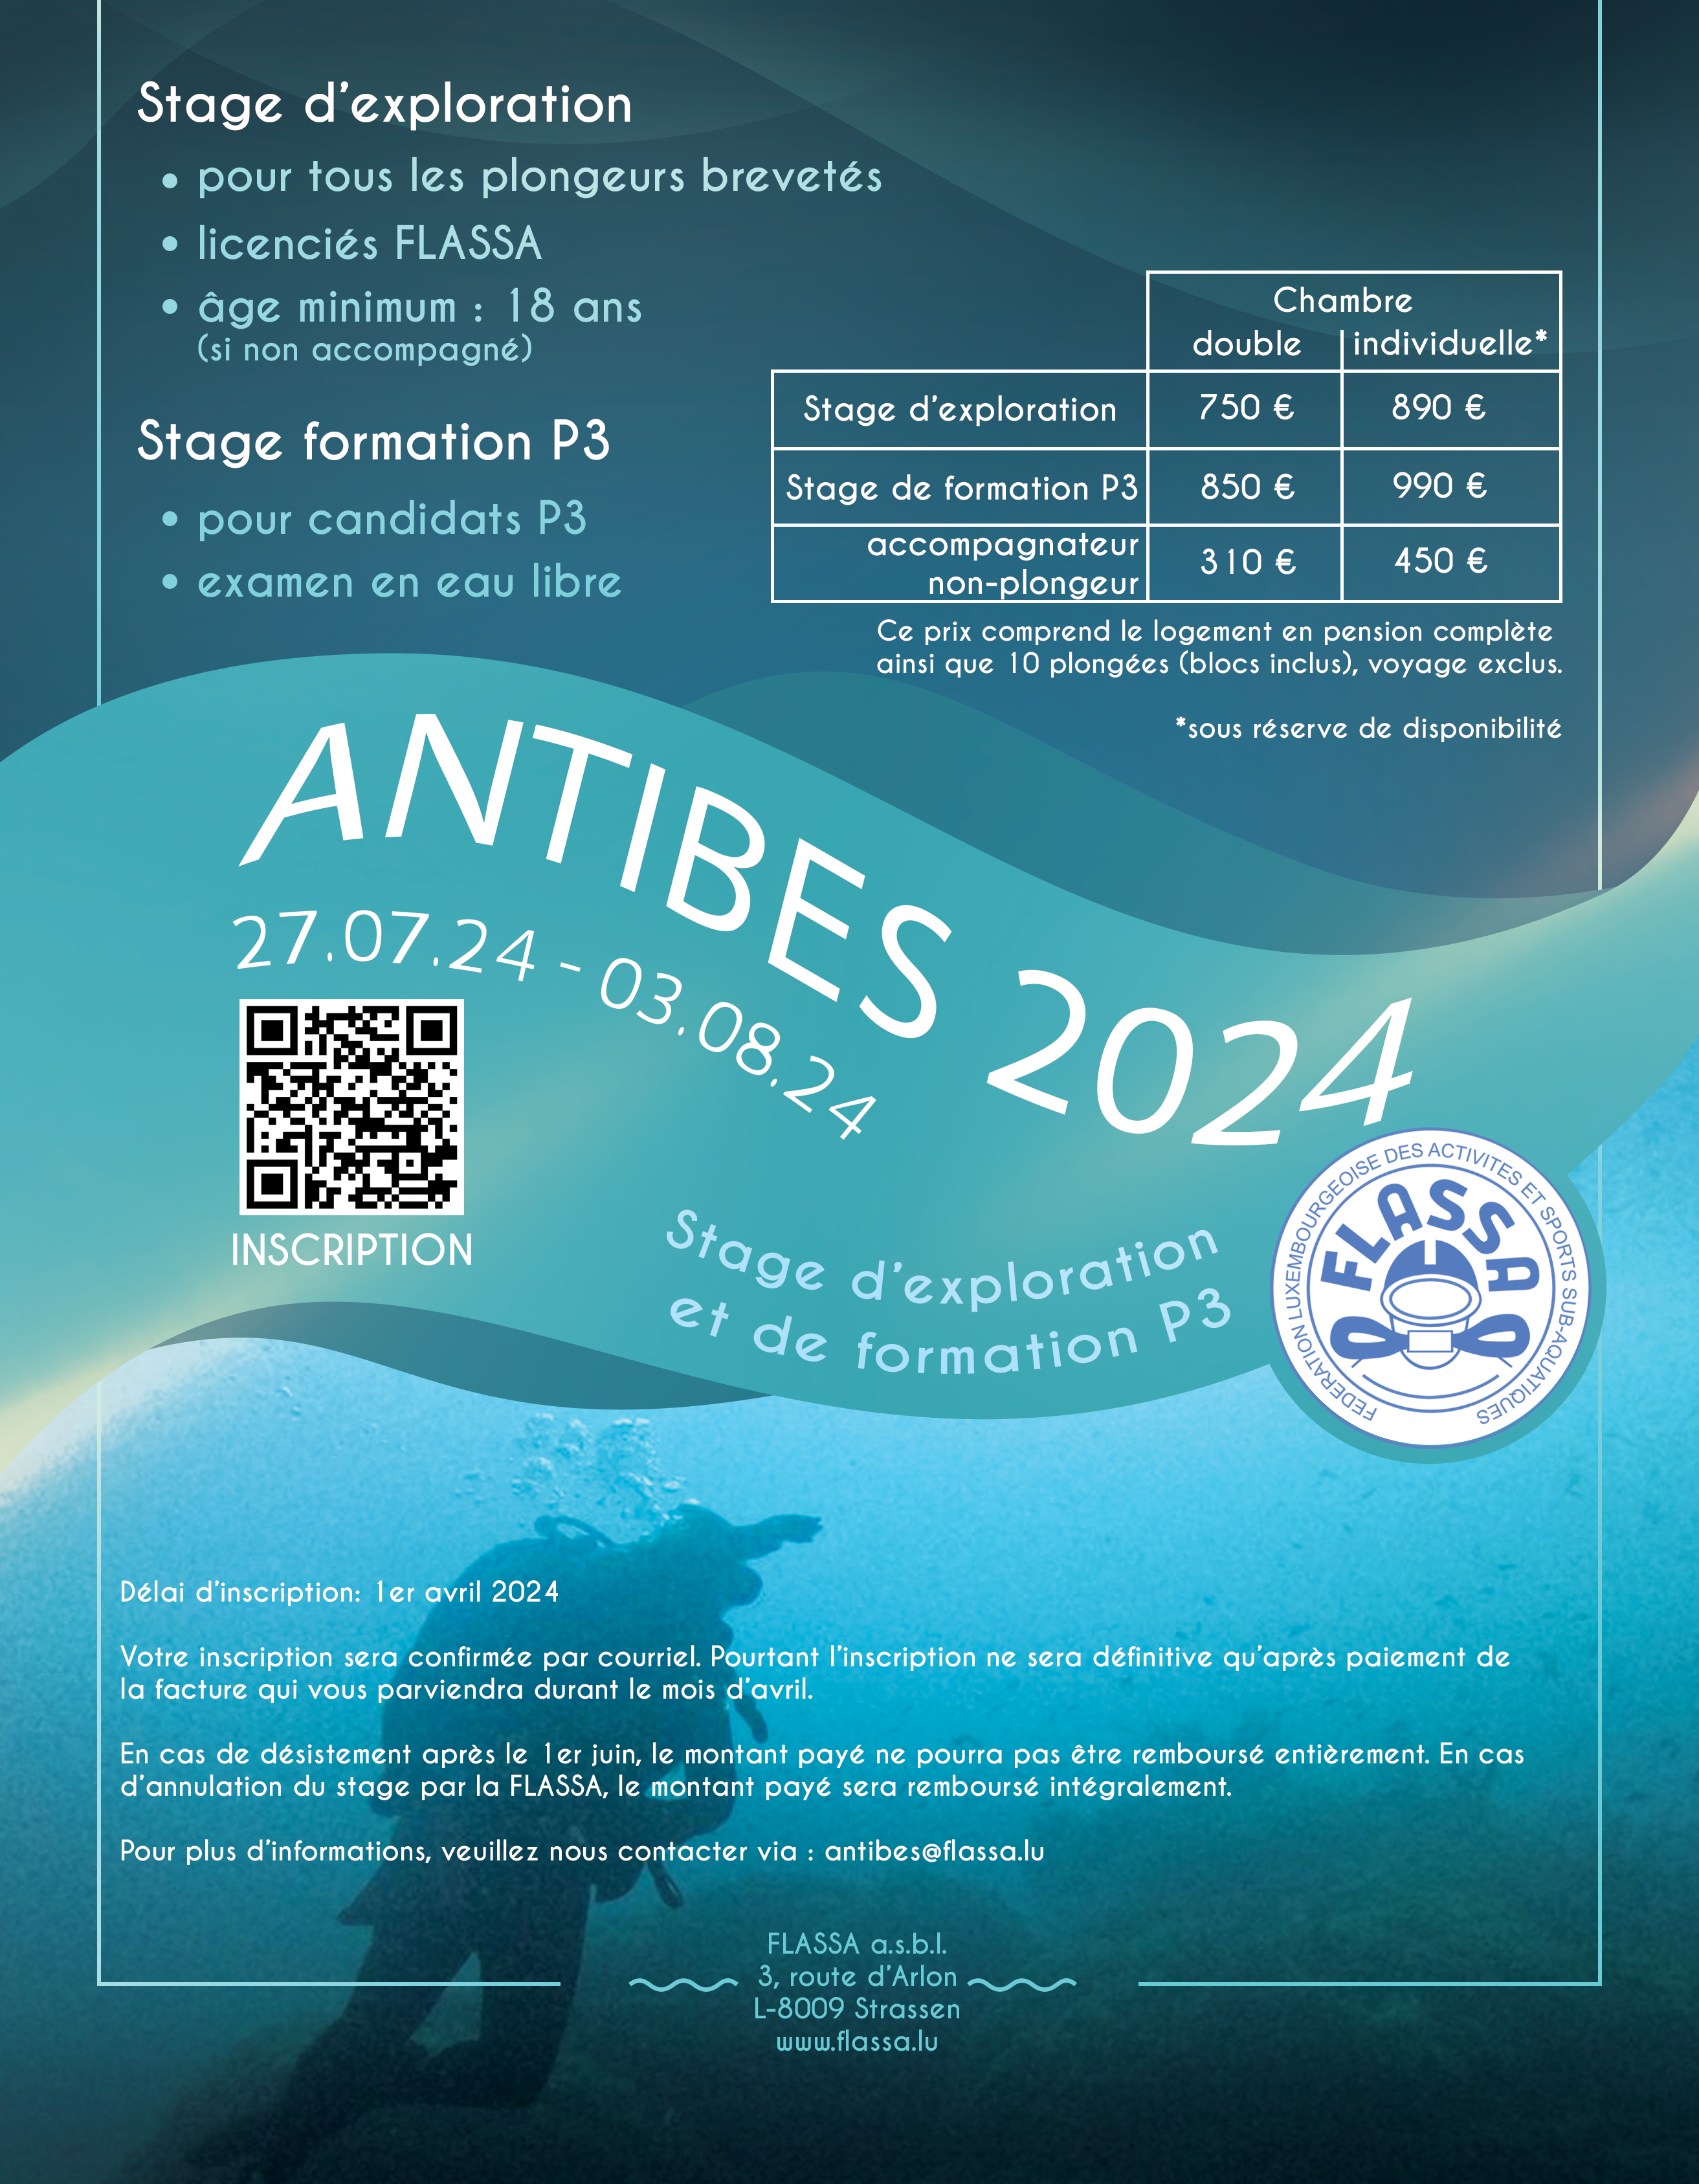 Antibes Flyer Link net clickable